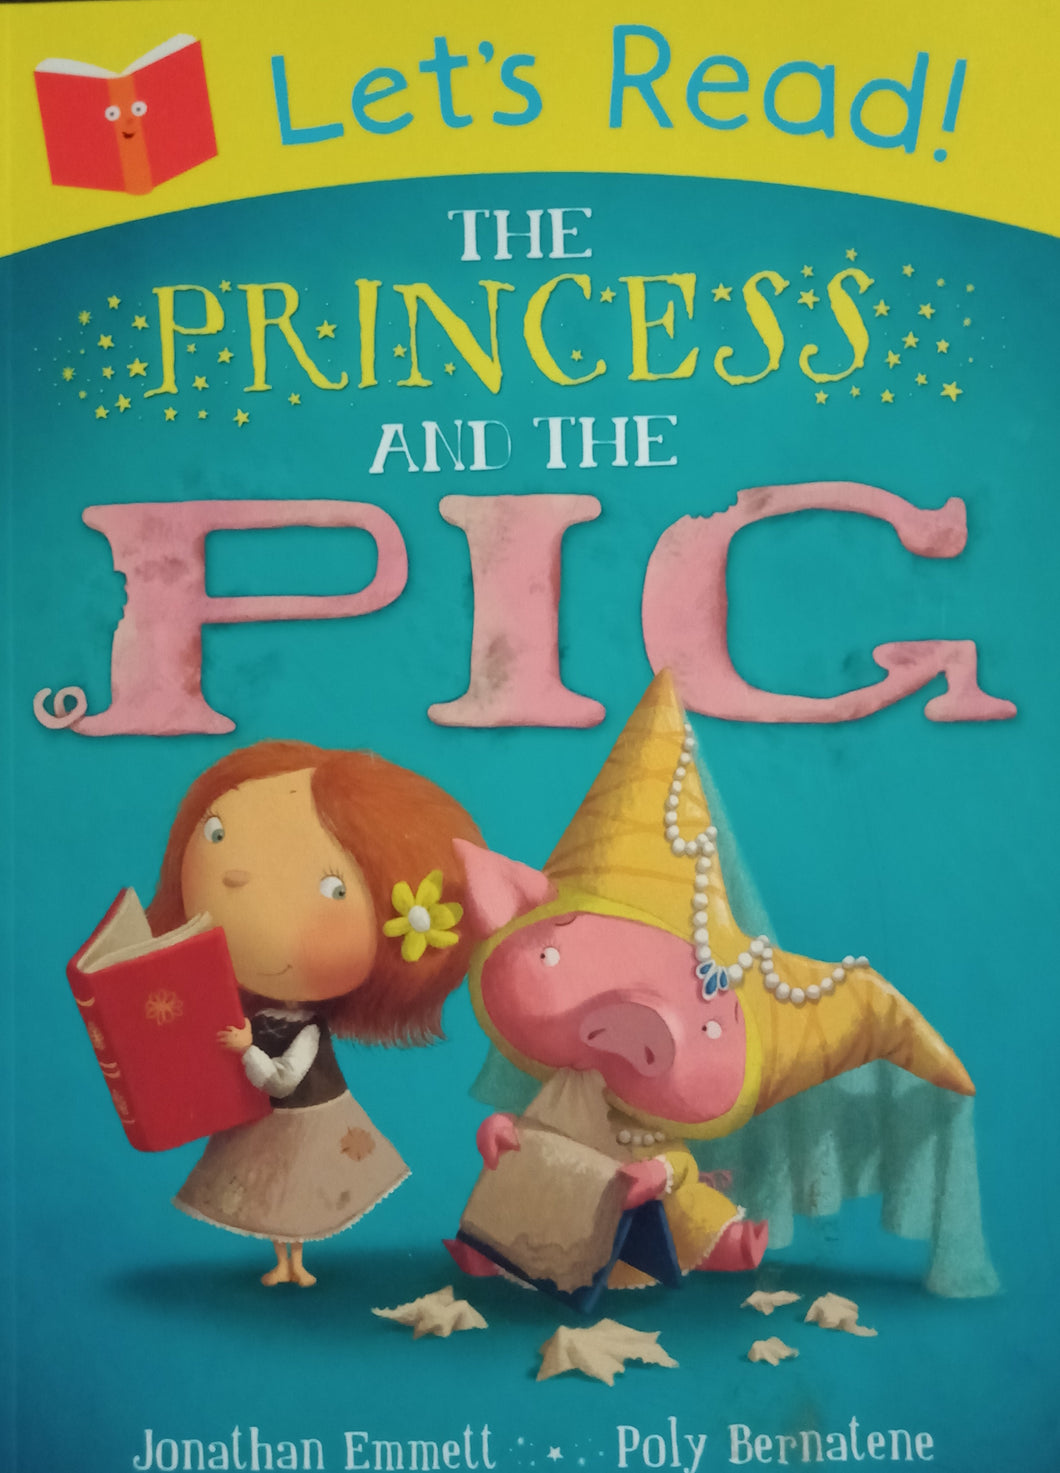 The Princess And the Pig by Jonathan Emmett & Poly Bernatene